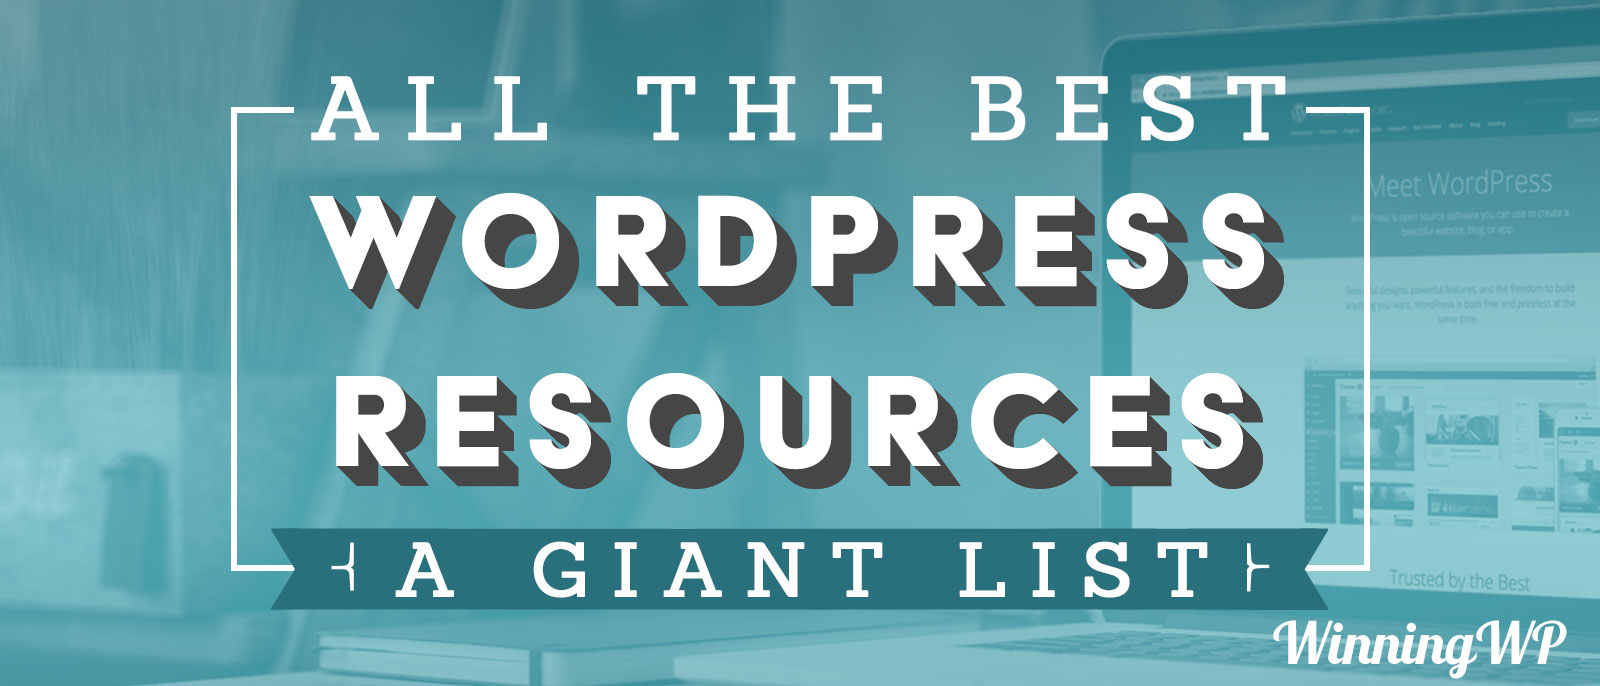 The Best WordPress Resources